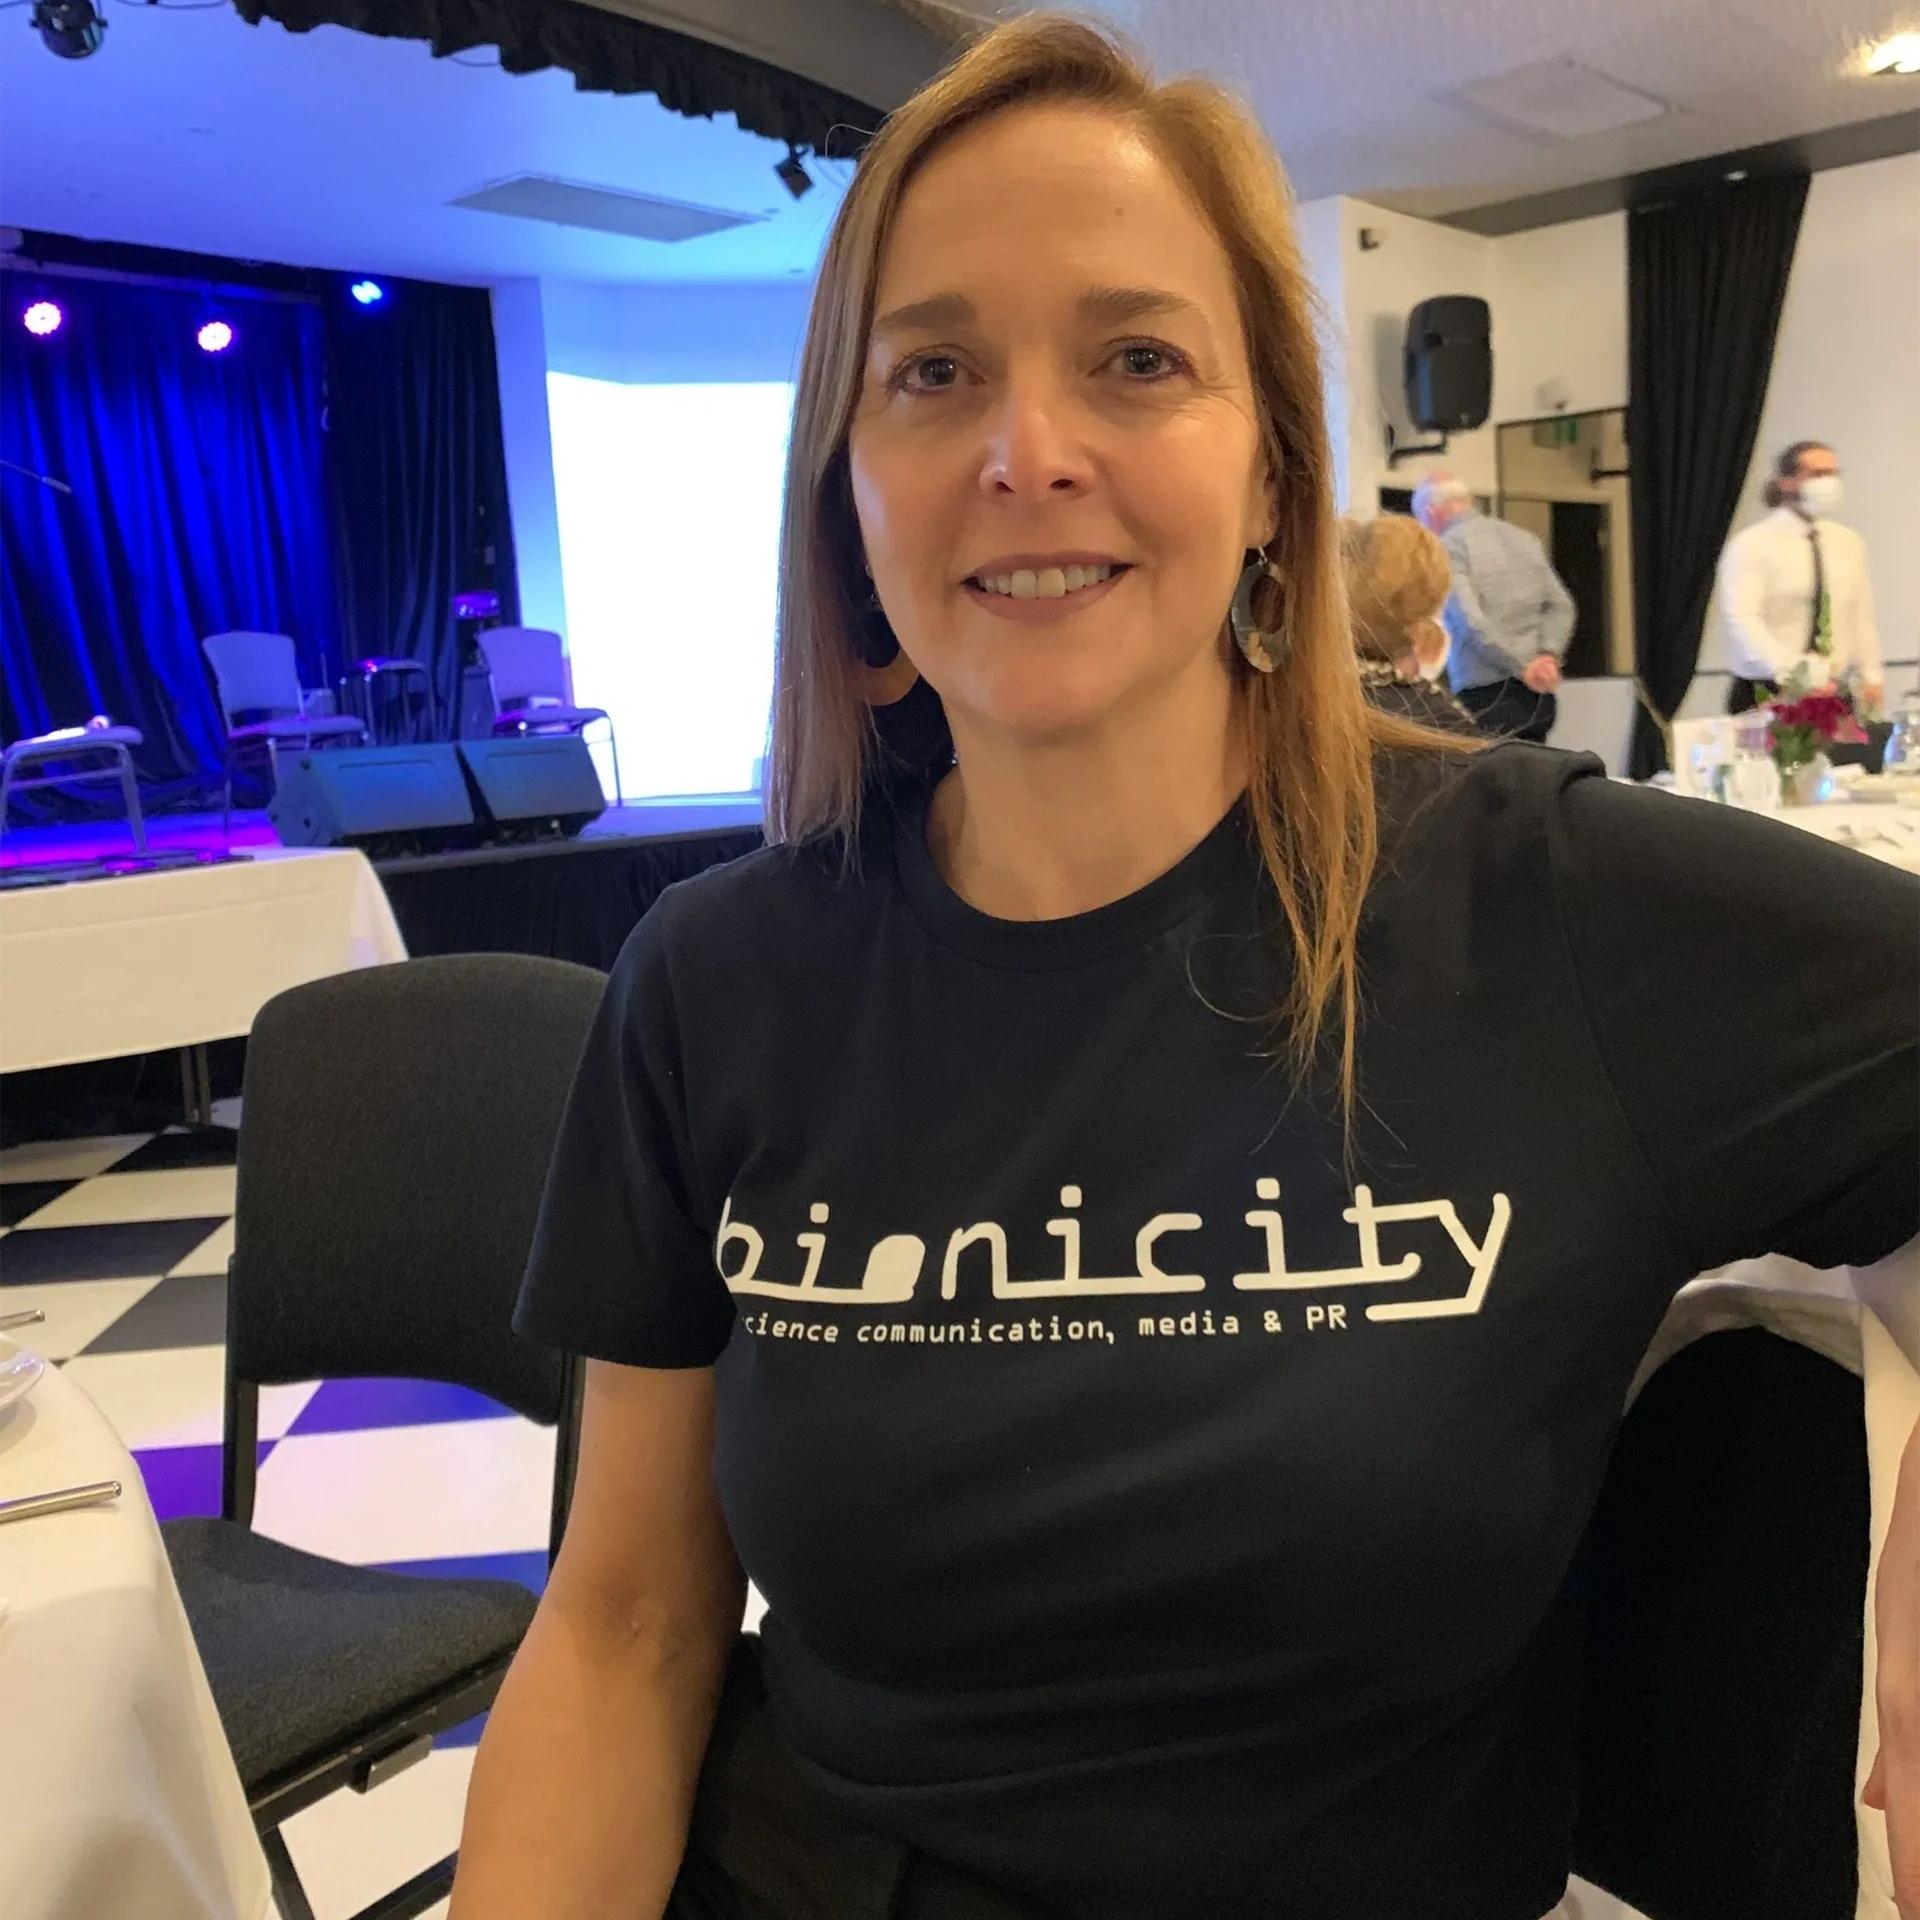 Founder of Bionicity - Vicky Wallace